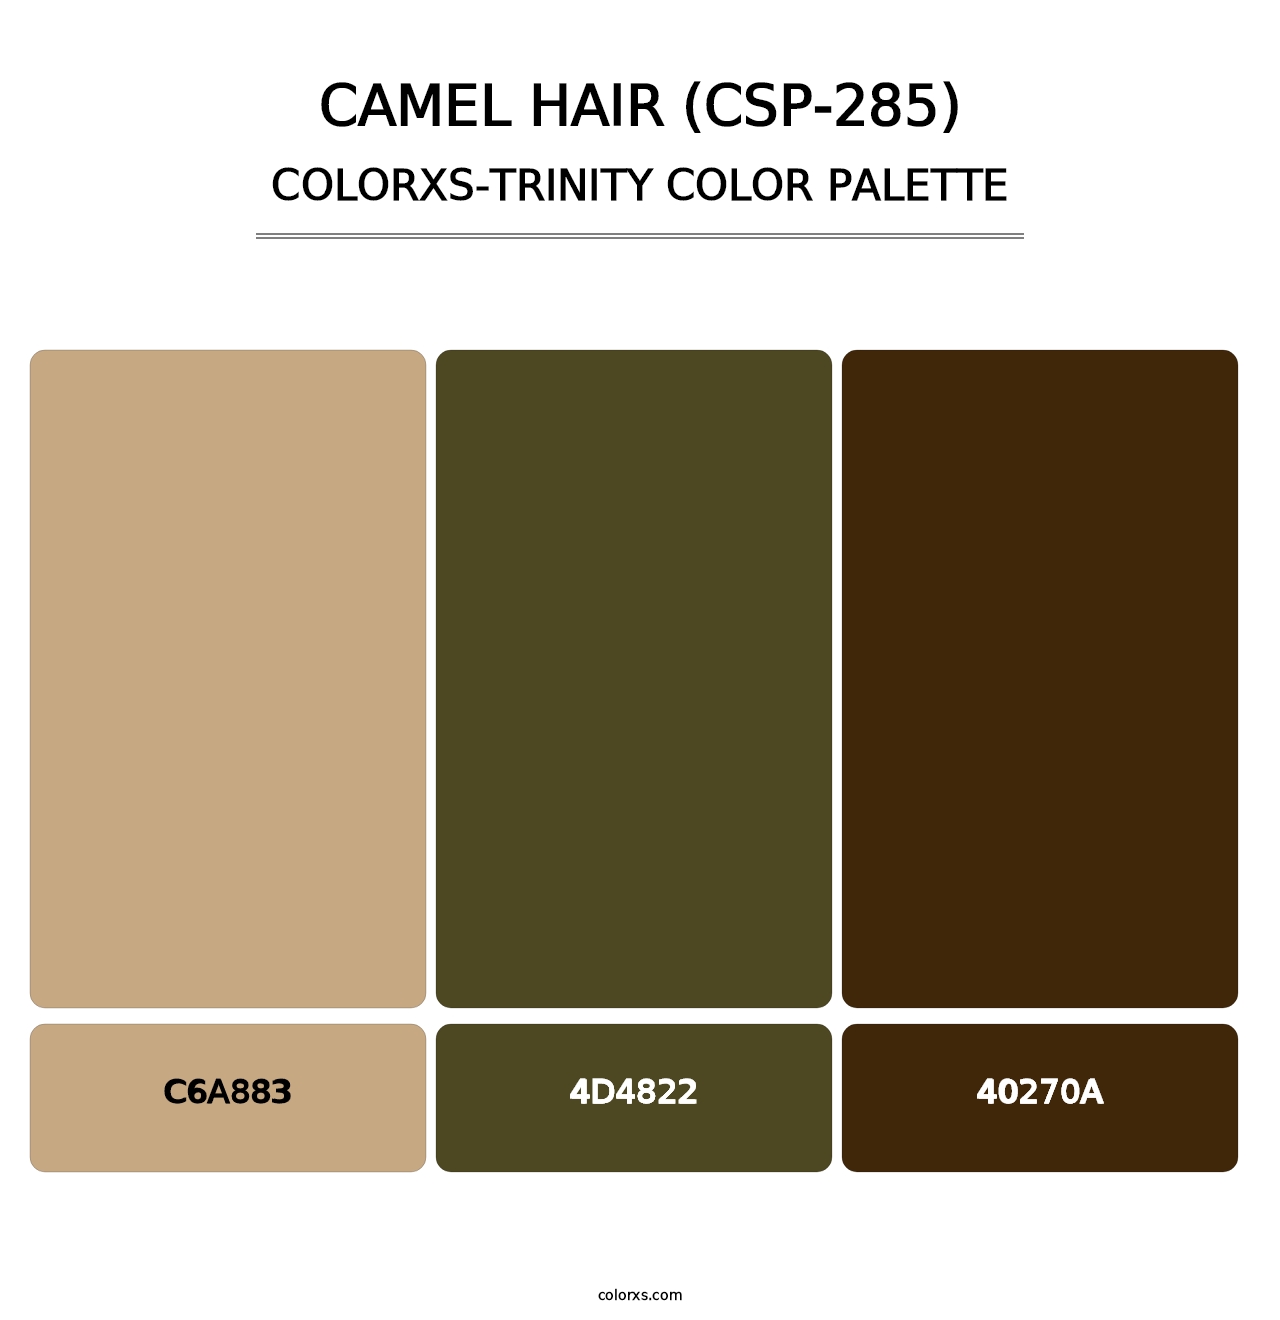 Camel Hair (CSP-285) - Colorxs Trinity Palette